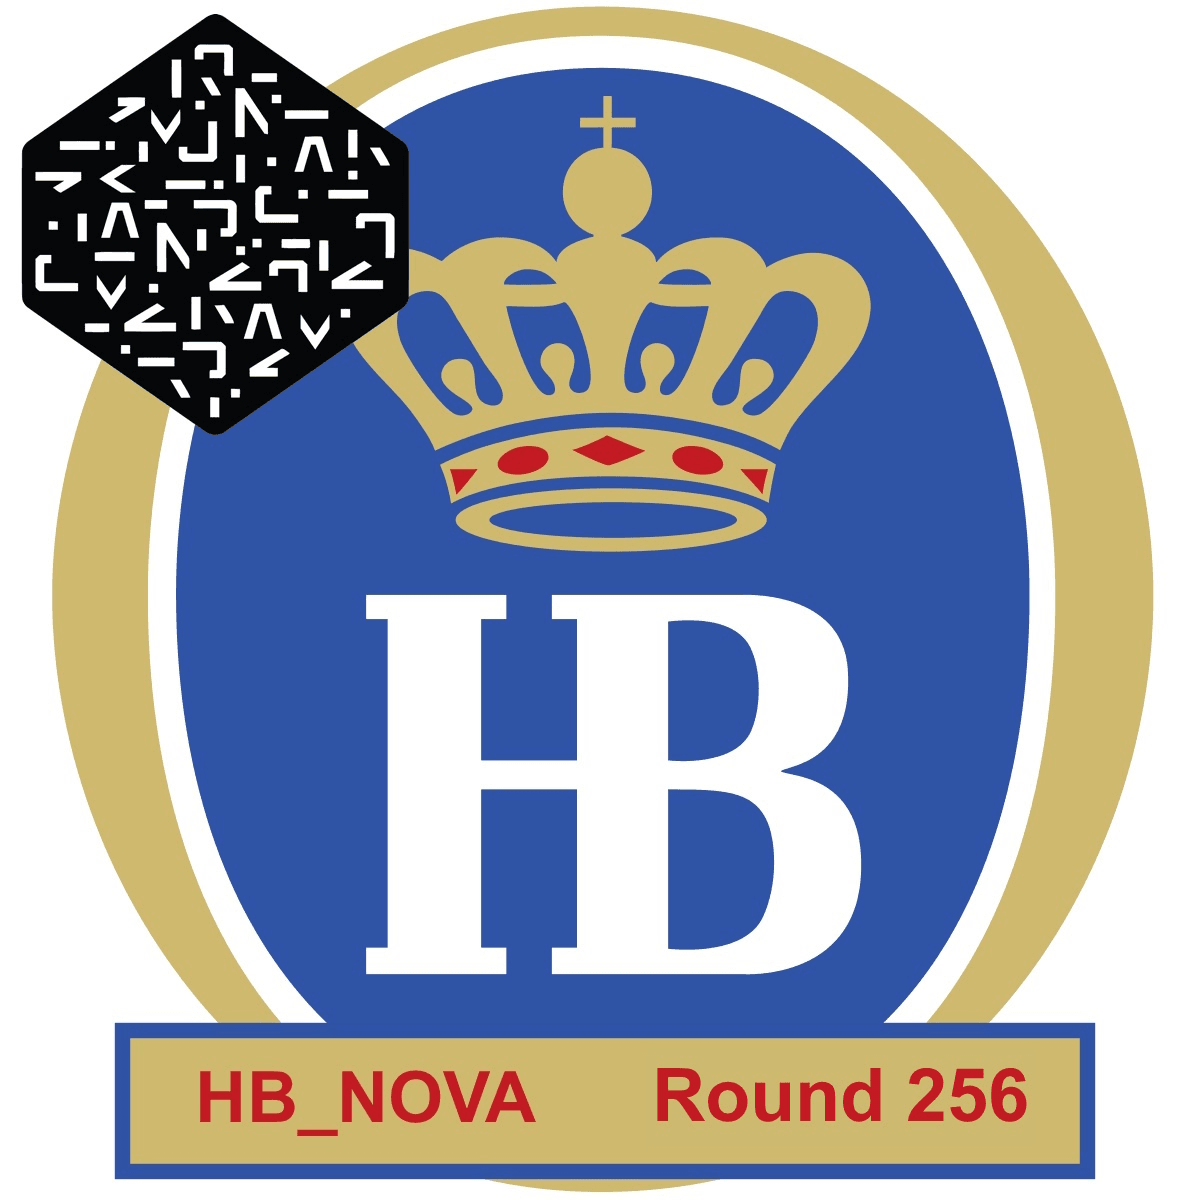 Numerai: HB_NOVA for Round 256